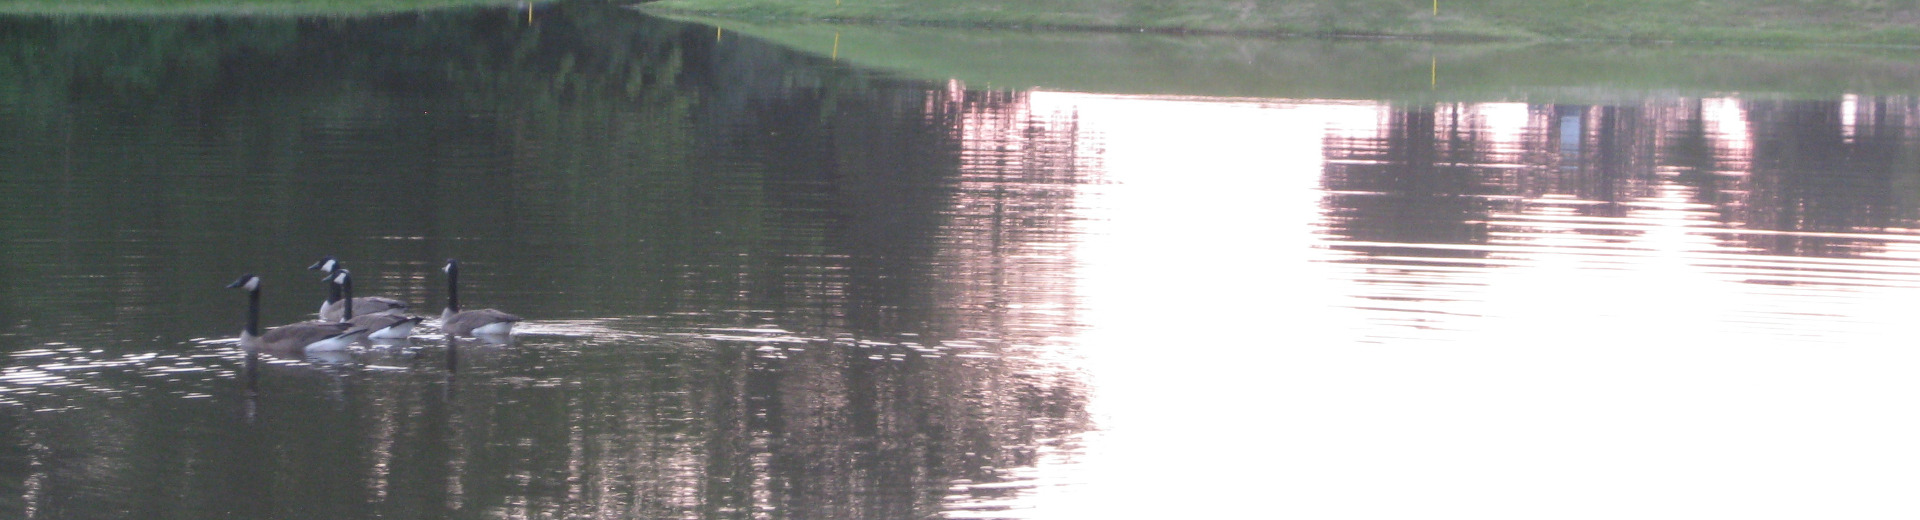 Ducks in lake 